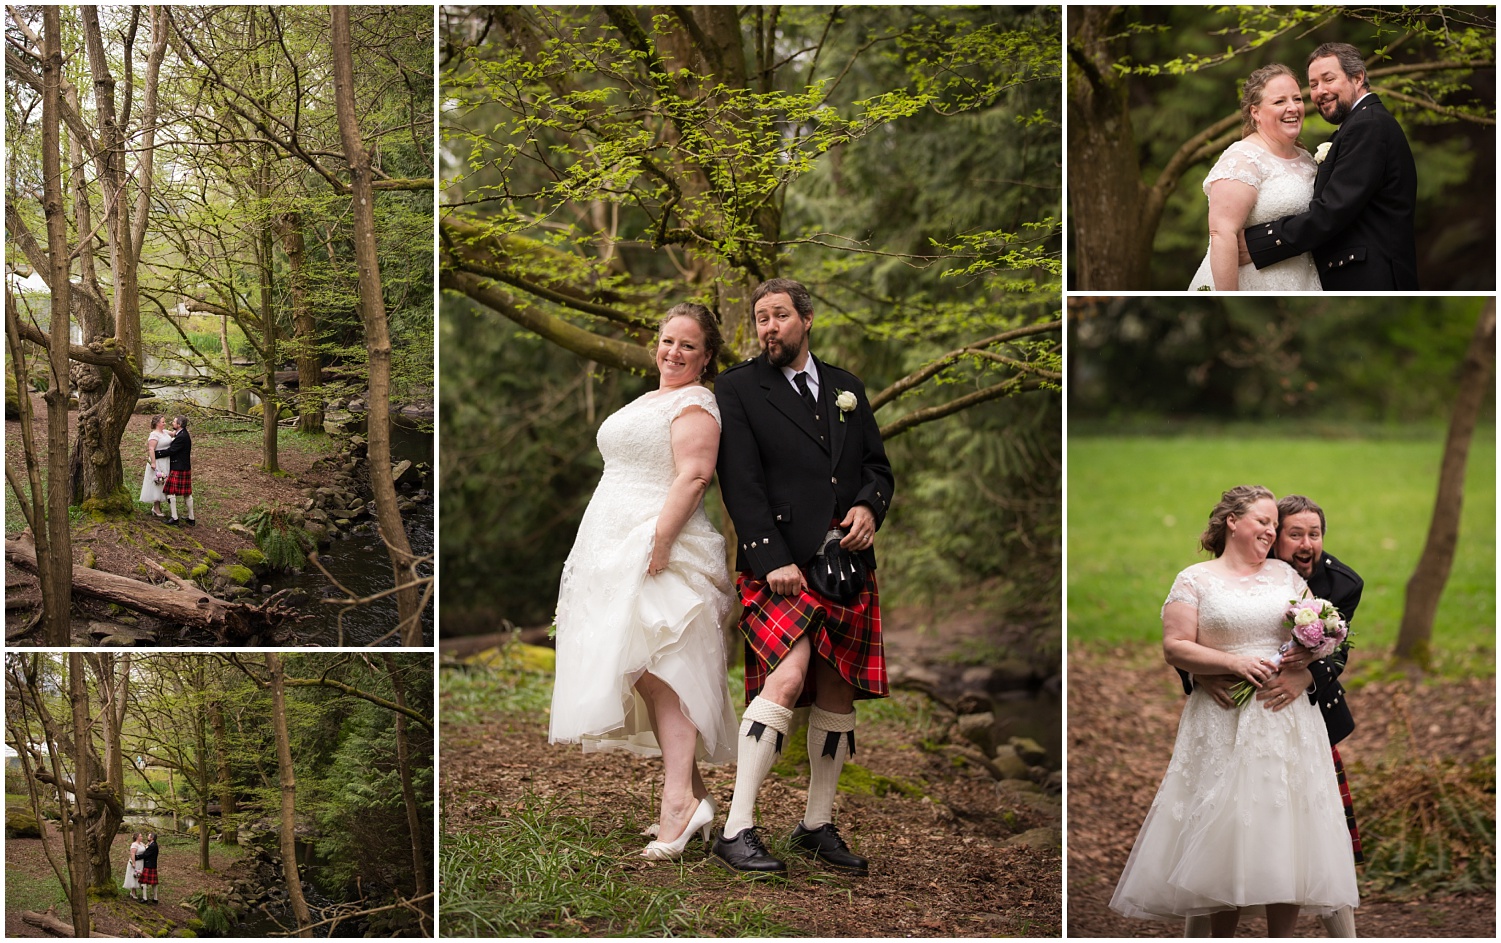 Amazing Day Photography - Hart House Wedding - Deer Lake Park Wedding - Burnaby Wedding Photographer (10).jpg